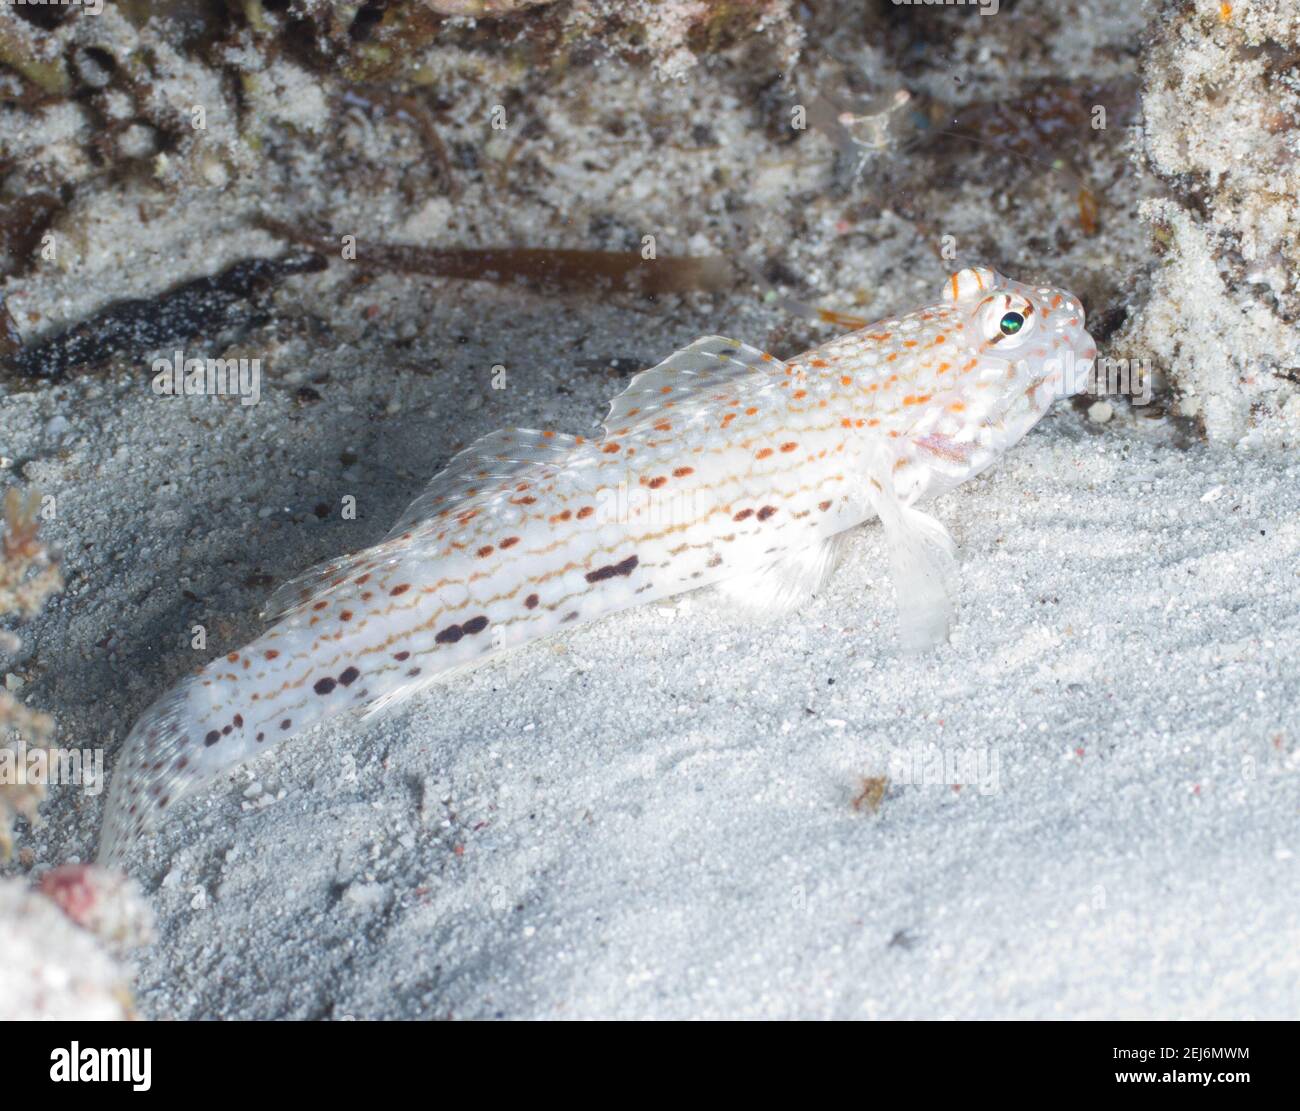 Spotted Sand Goby a.k.a. the Rigilius goby (Istigobius rigilius). Stock Photo